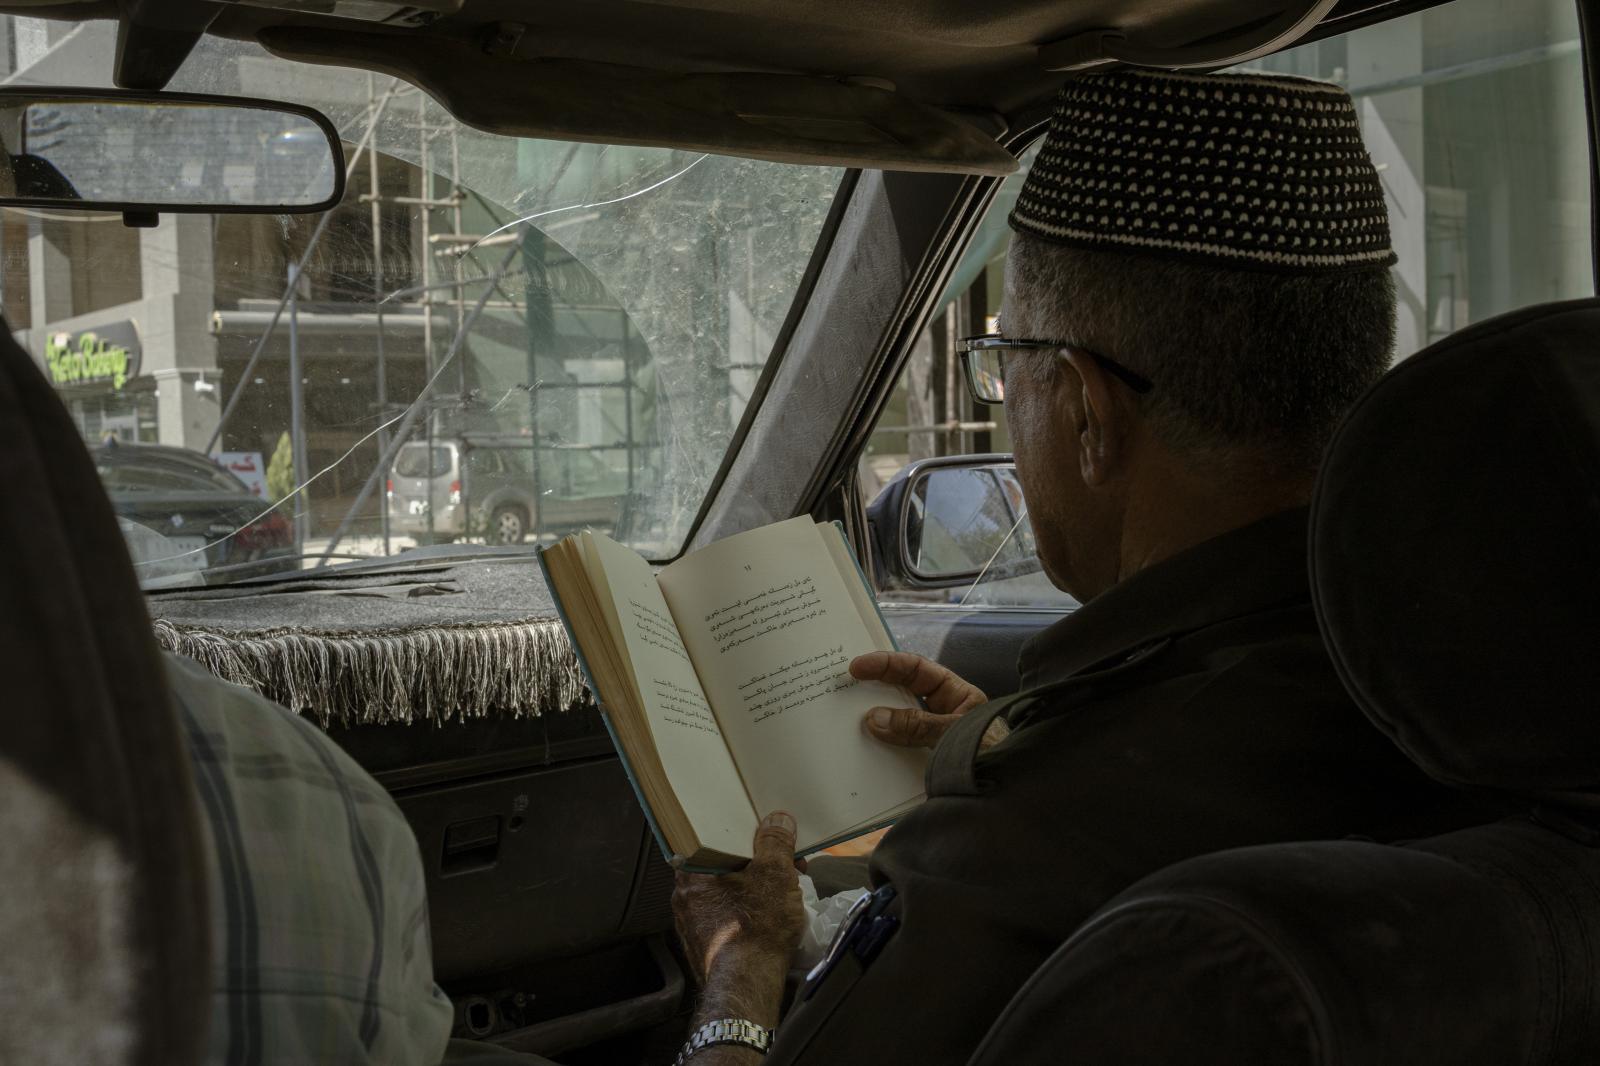 Hazar Jaf, an elderly Kurd, rea... an Iranian book while driving.